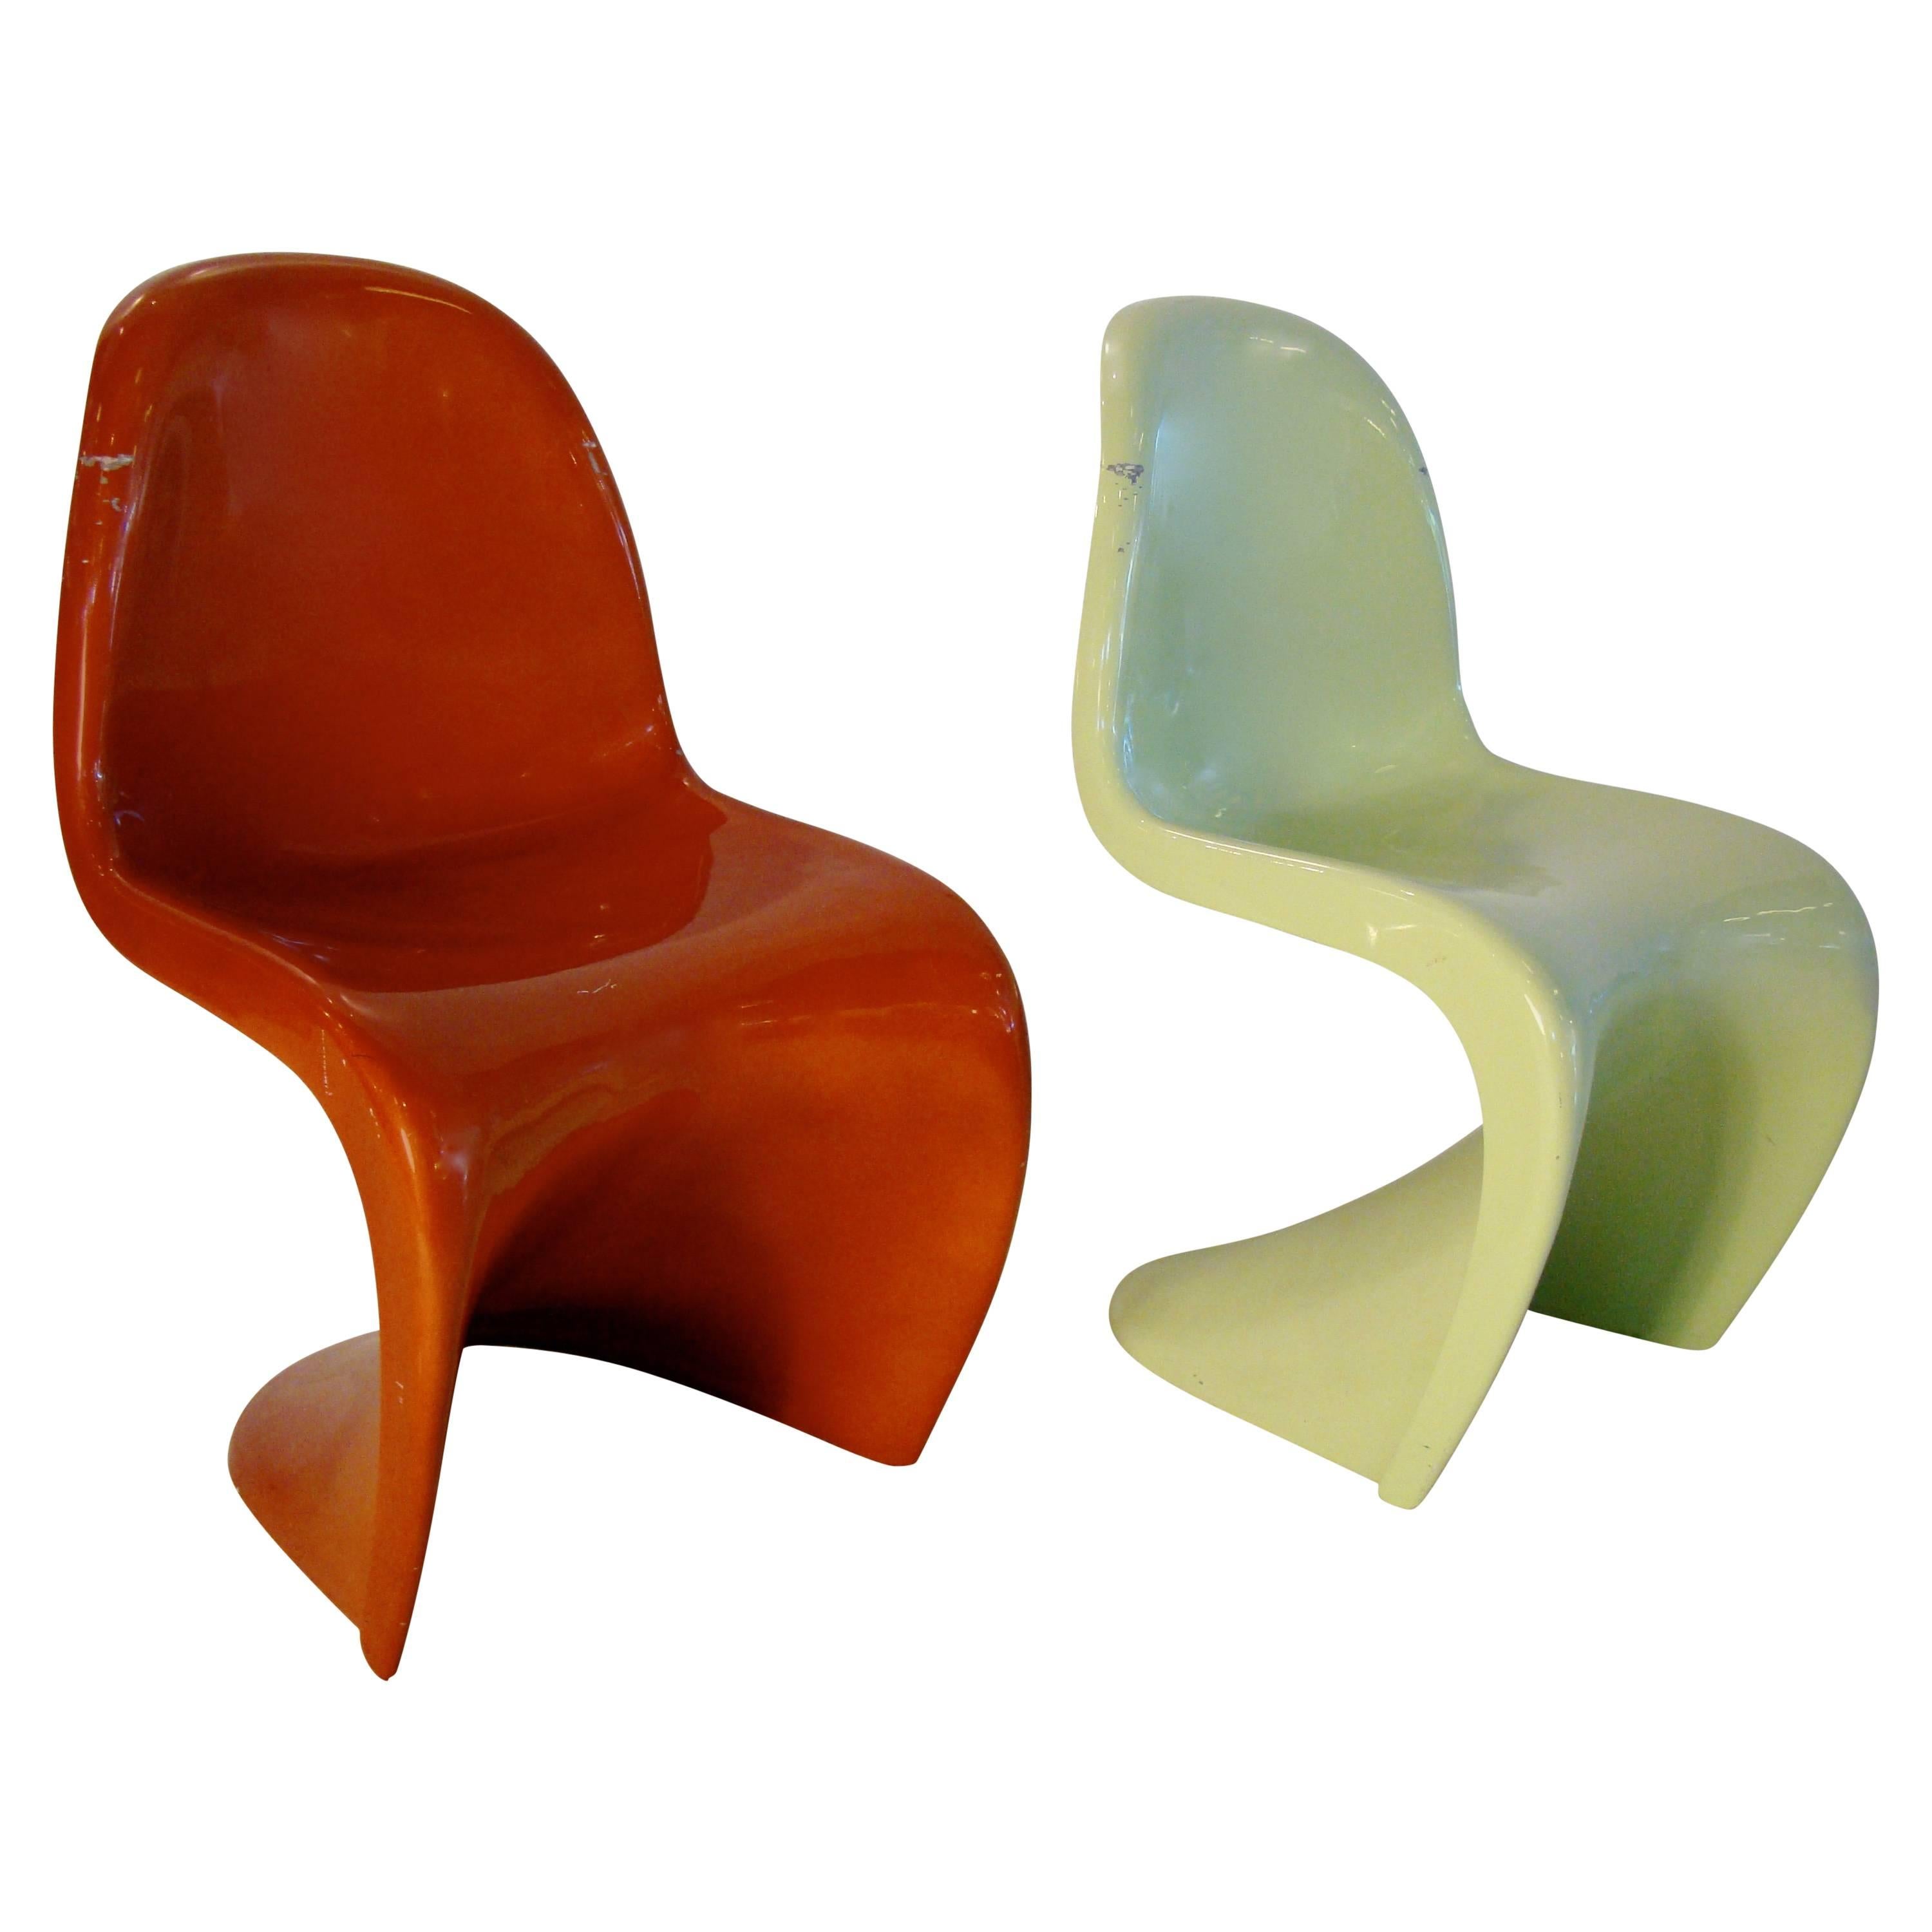 Verner Panton Original S Chair in Polyester and Fiberglass, circa 1965 For Sale